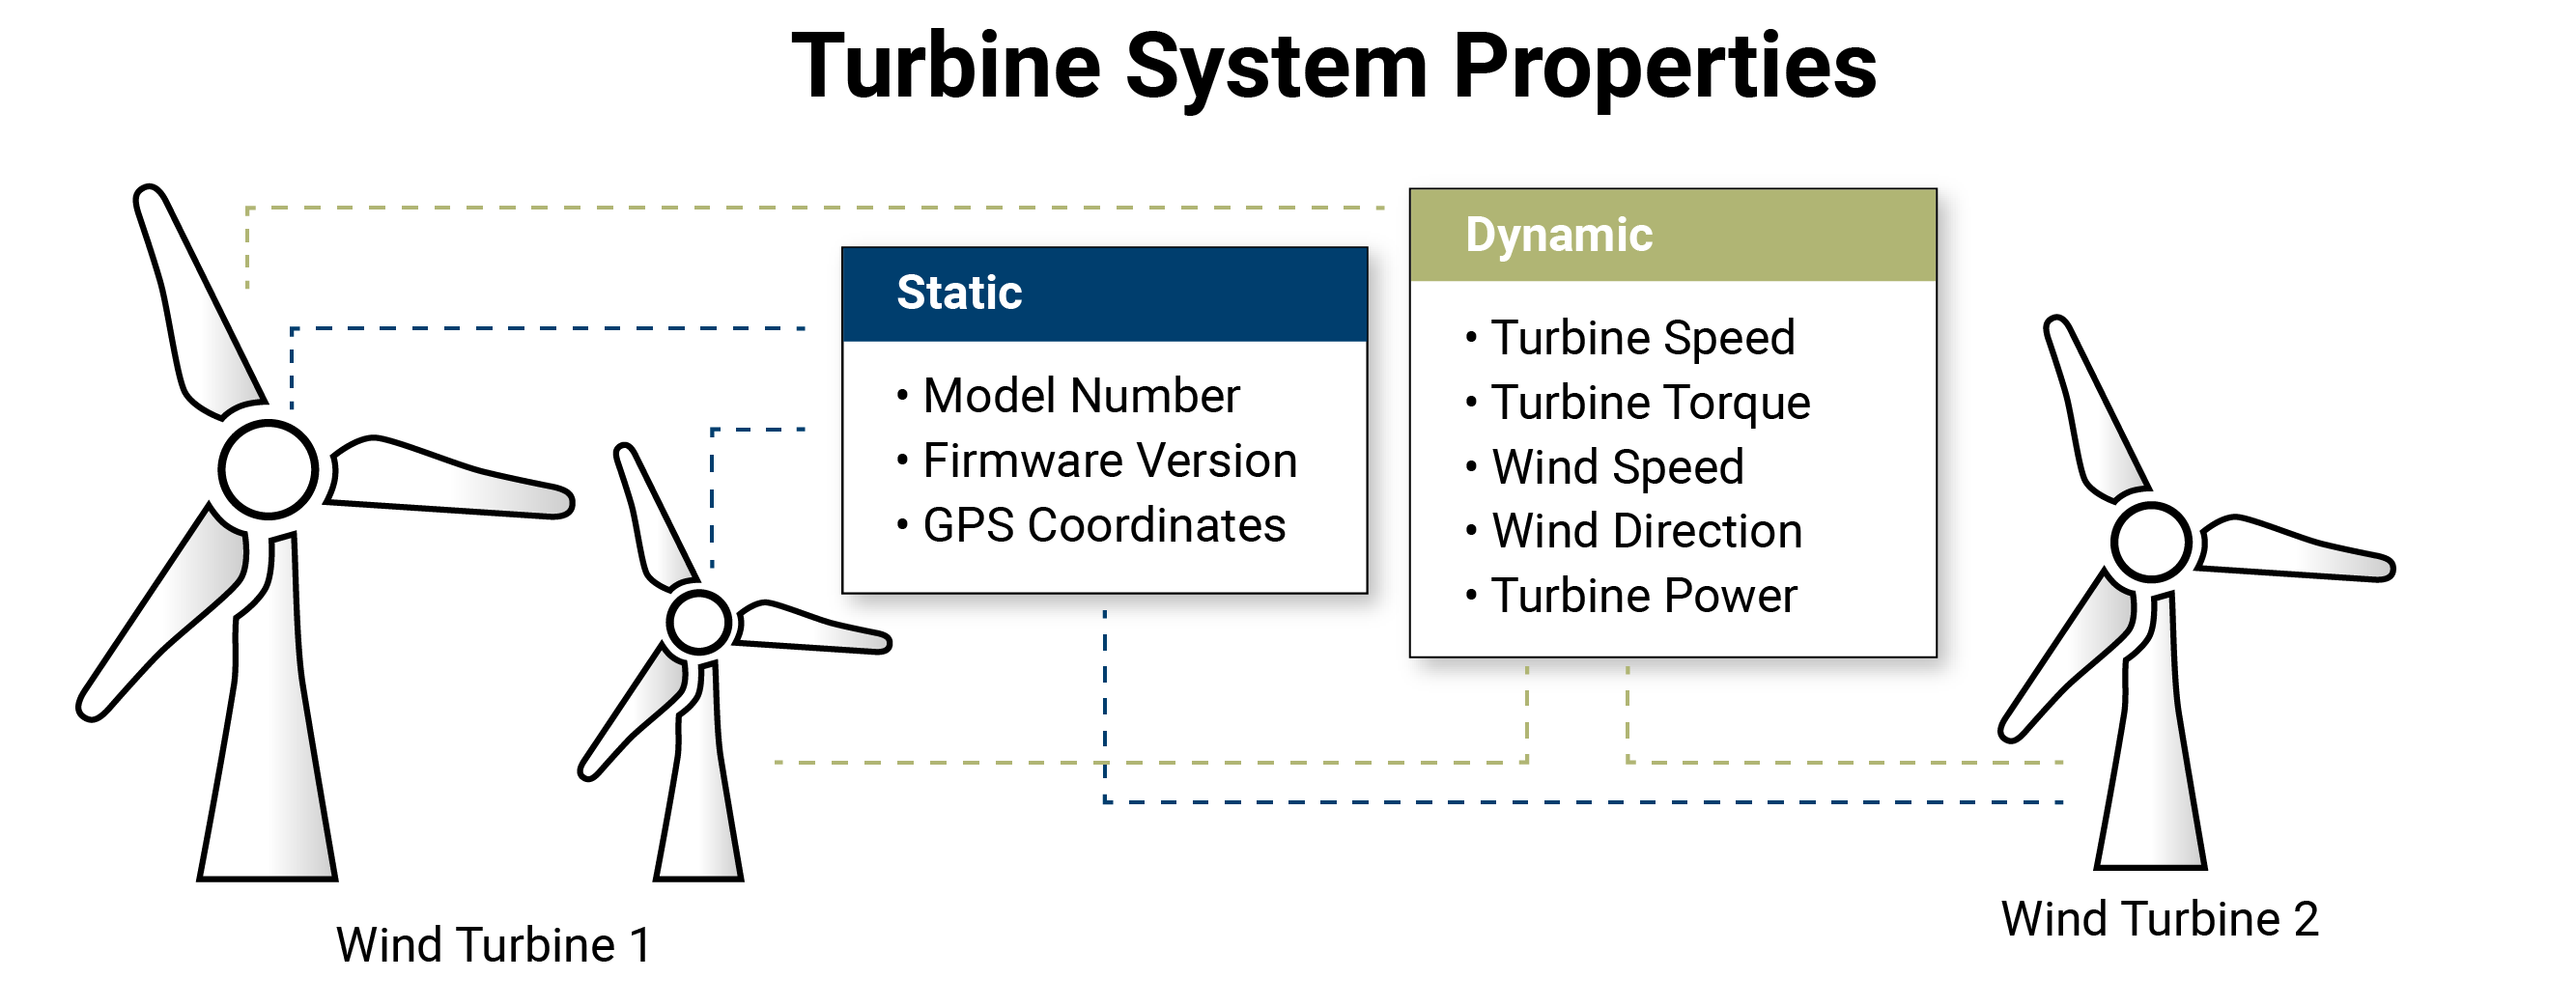 turbine system